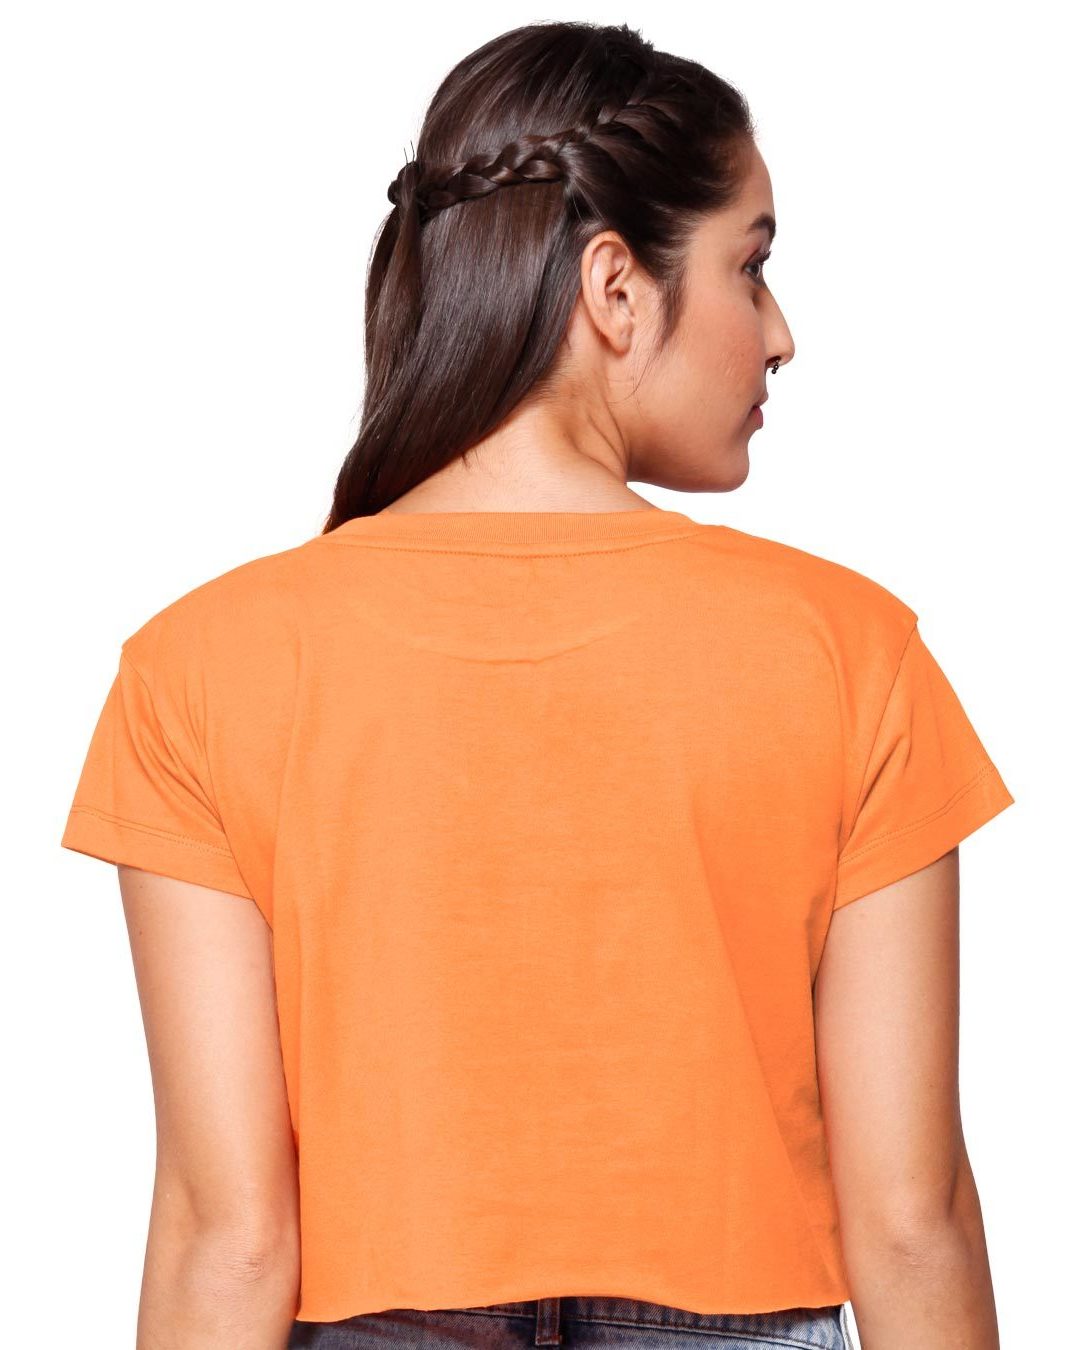 Shop Tangerine Orange Plain-Back